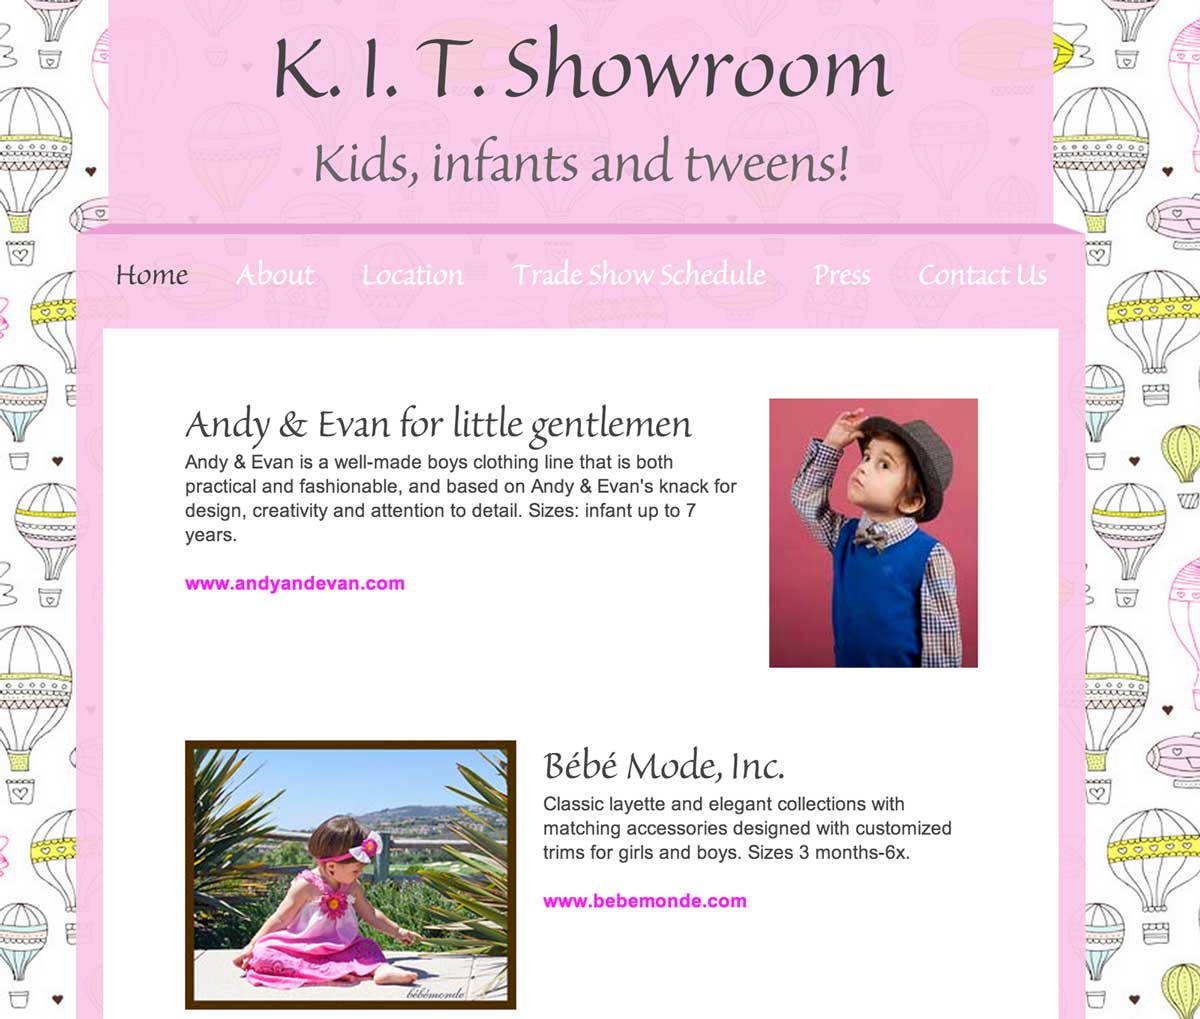 KIT Showroom website